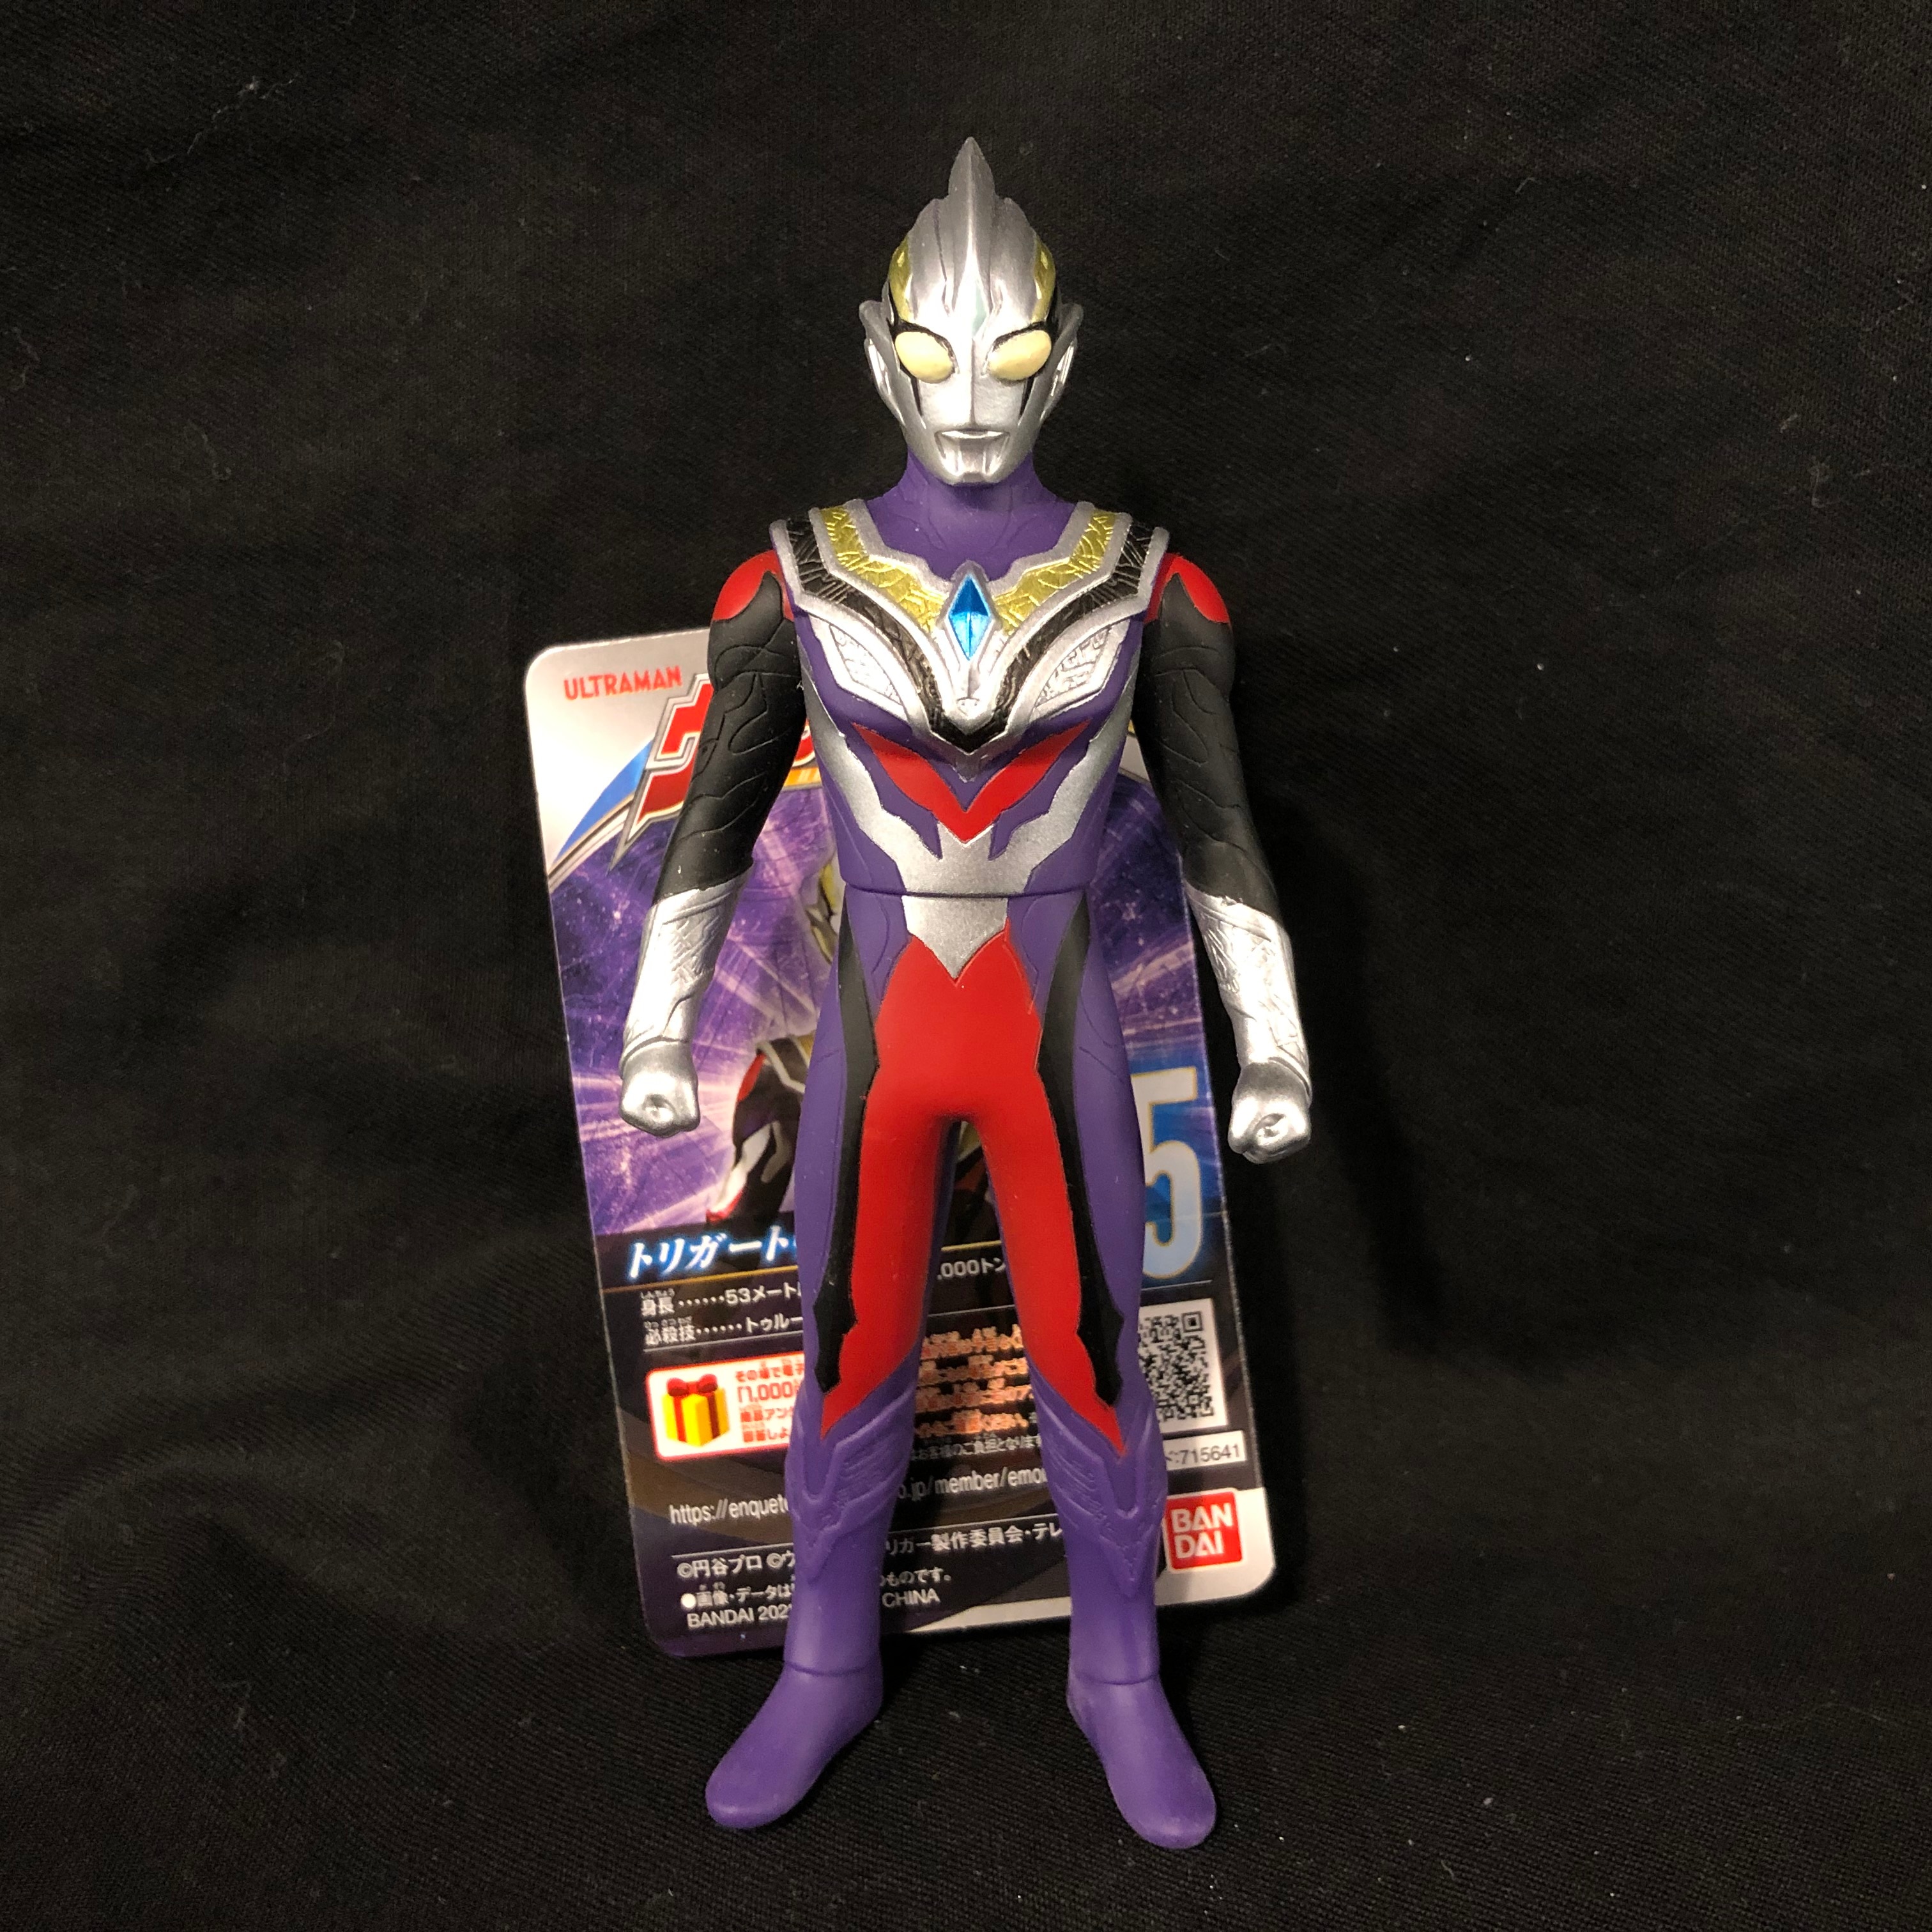 Ultraman Ultra Hero Ultraman Trigger Chibi Plush